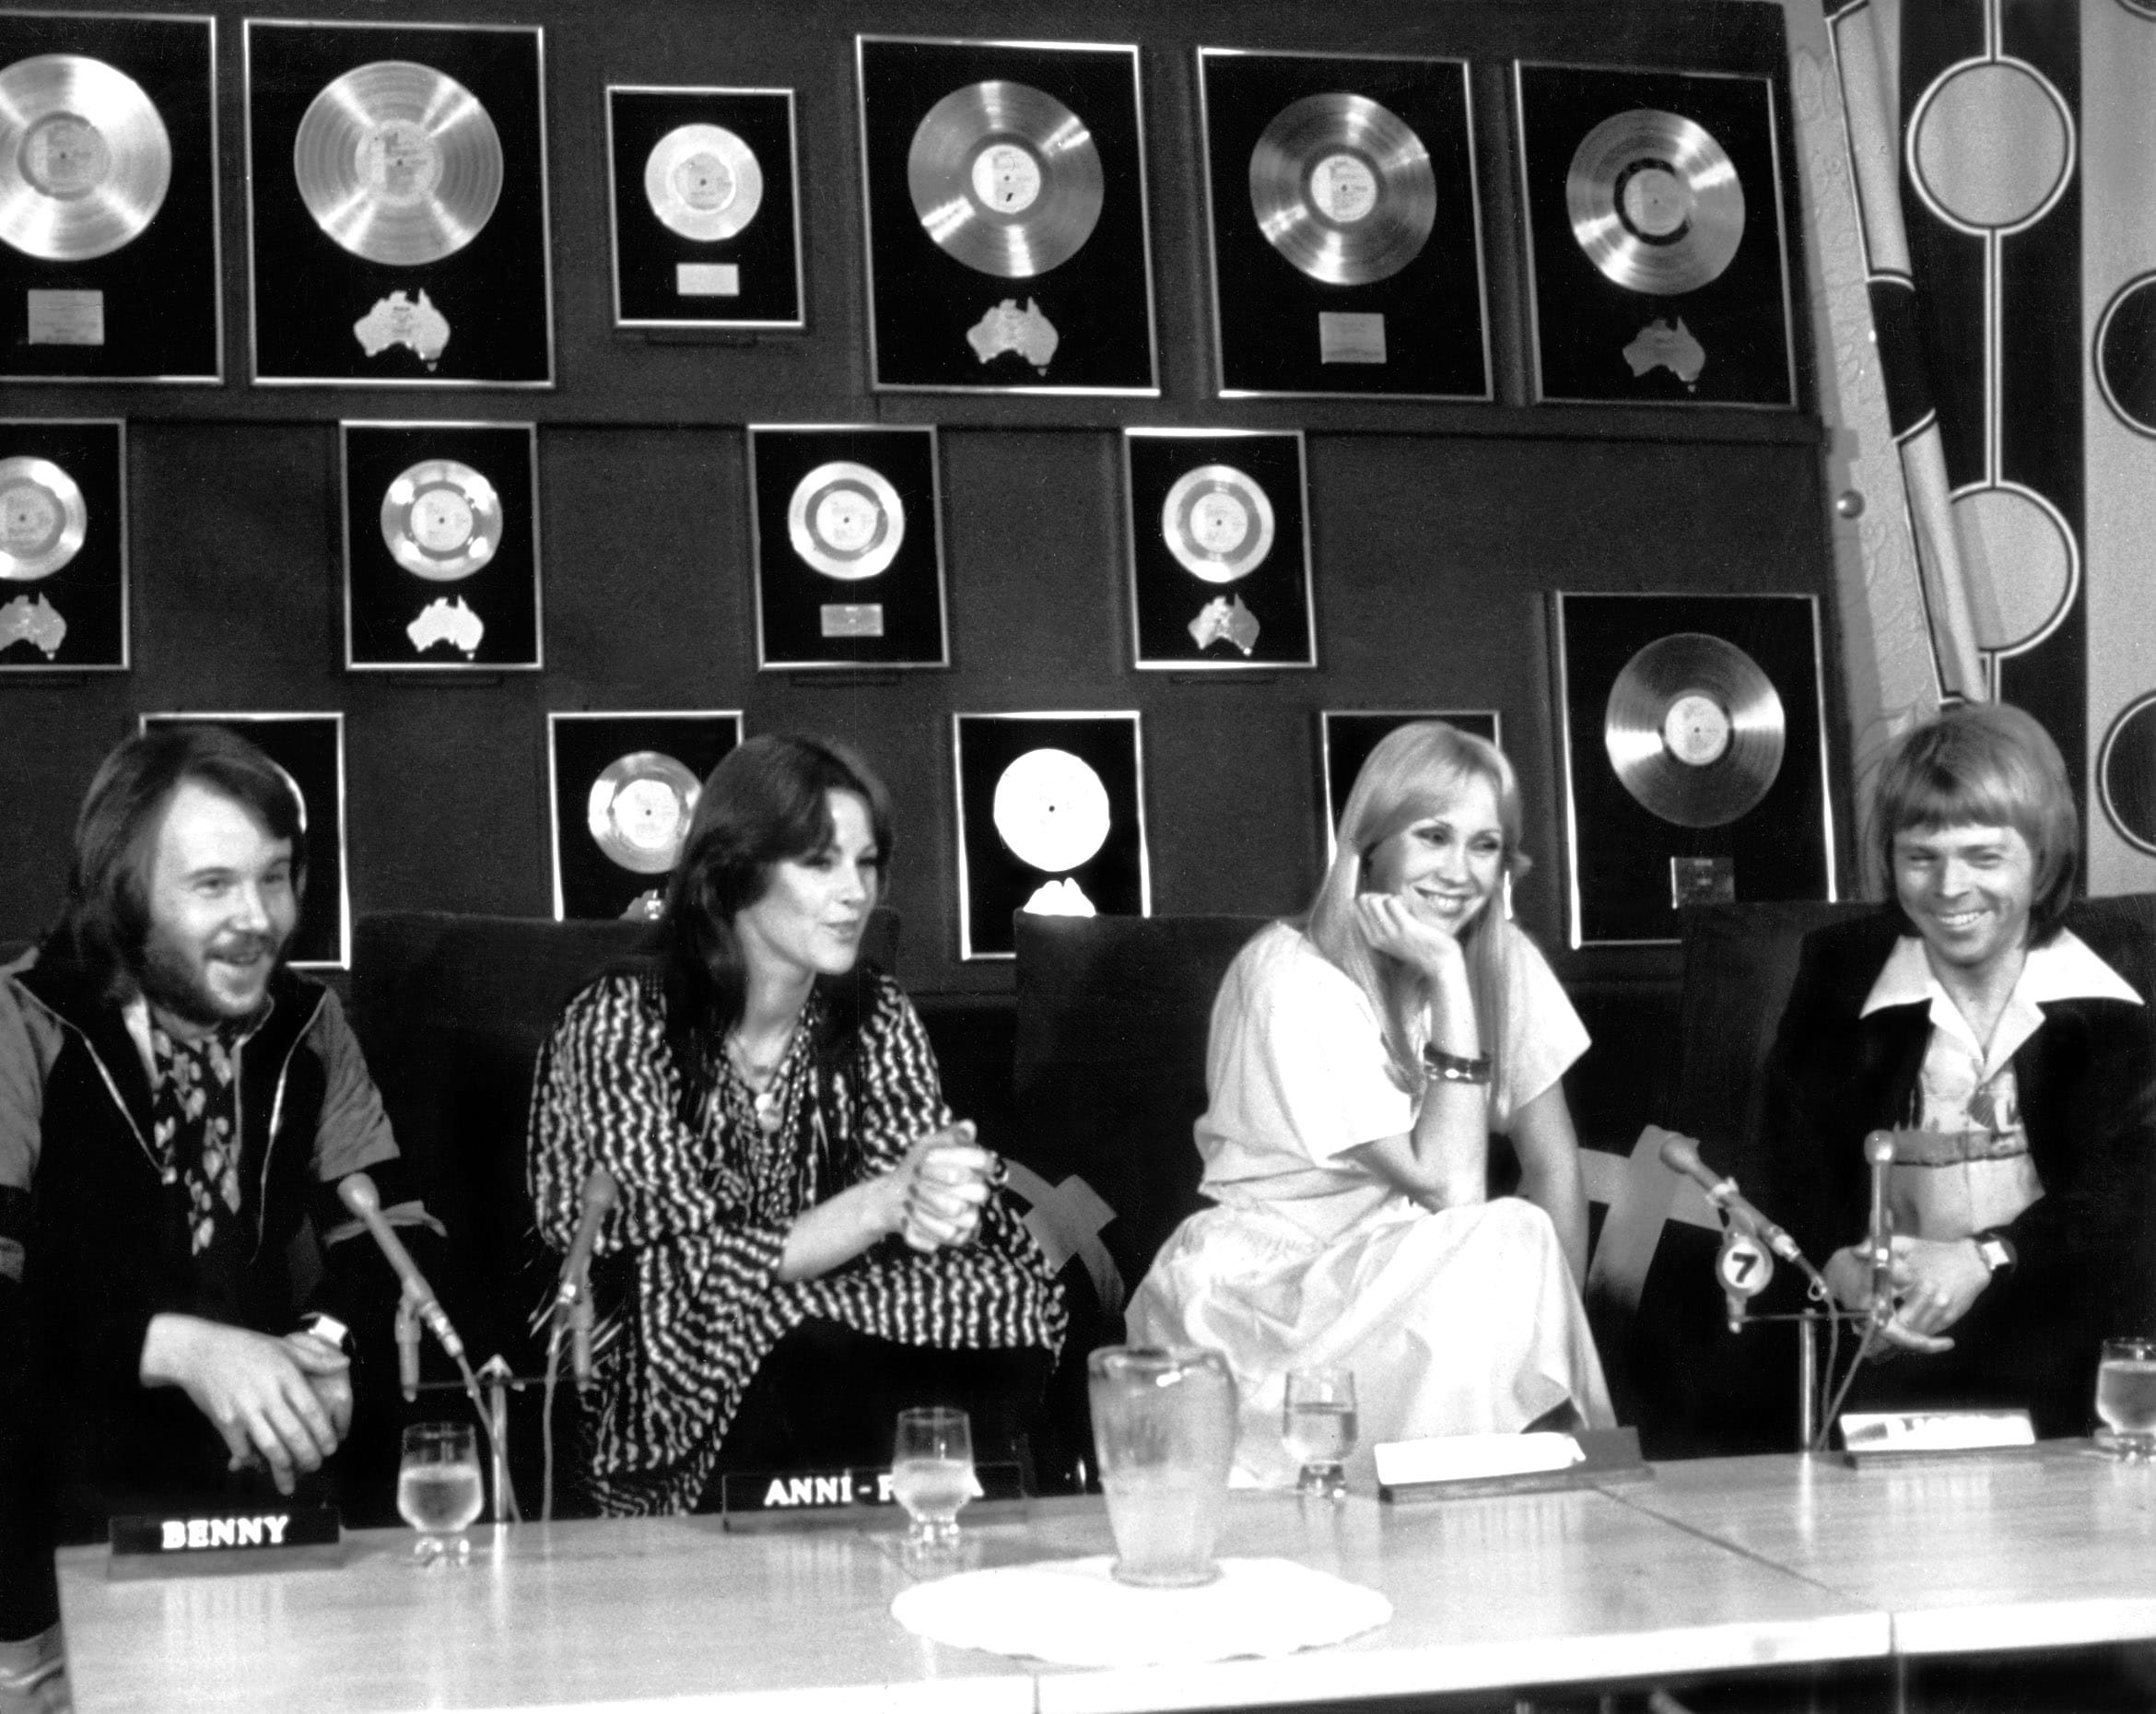 Abba, [Benny Andersson, Anni-Frid Lyngstad (aka Frida), Agnetha Faltskog, Bjorn Ulvaeus], at Austrailian Press Conference, circa late 1970s 